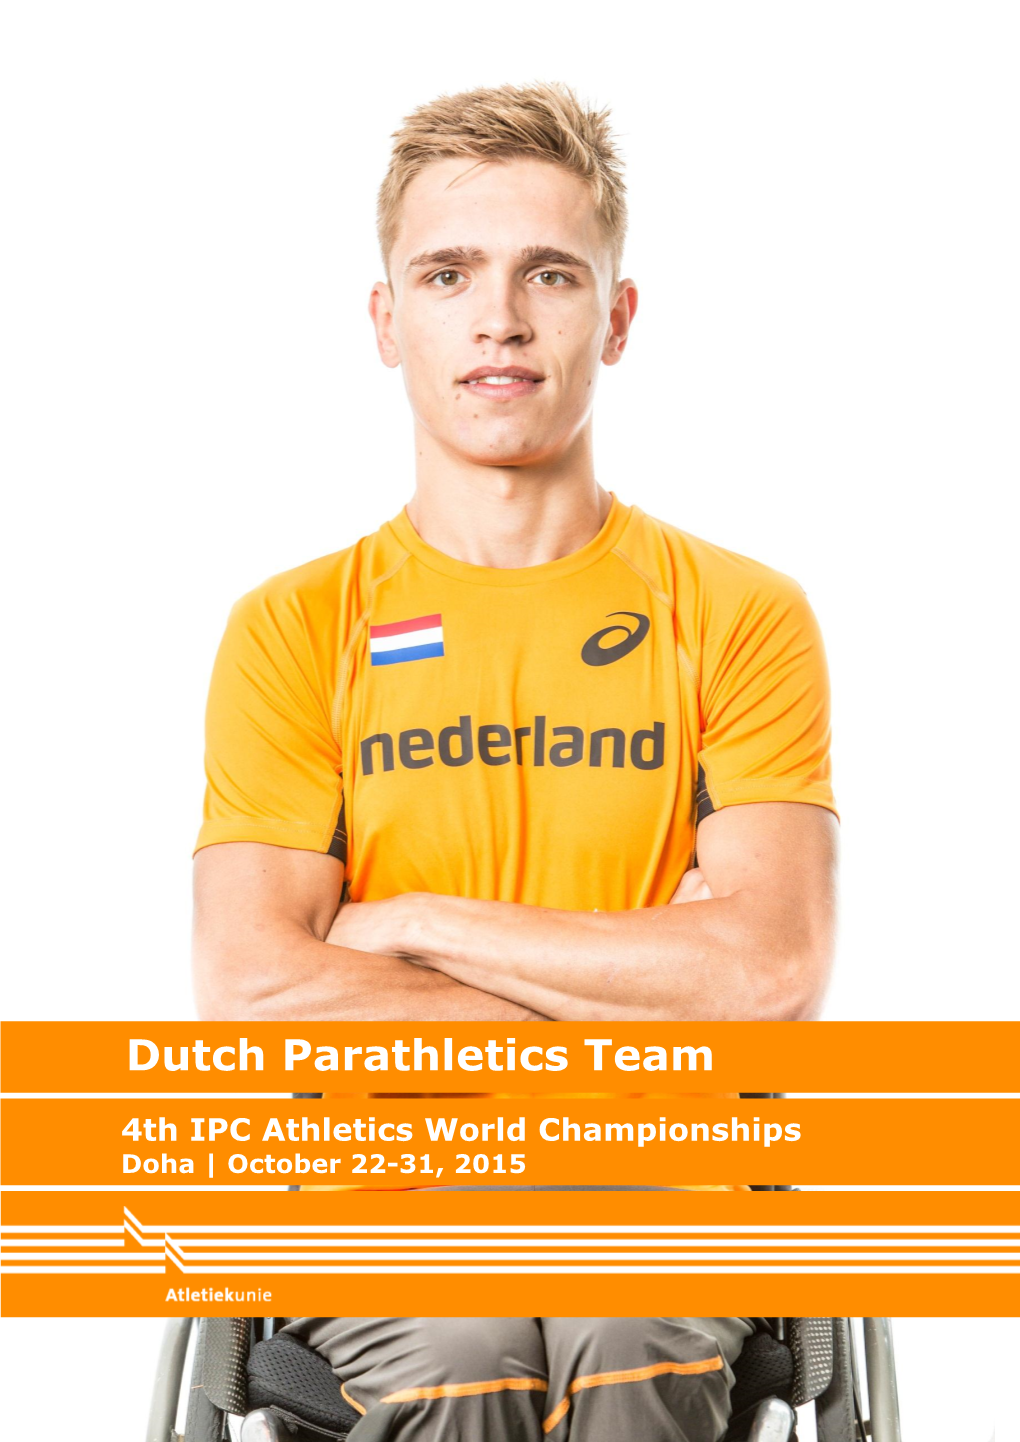 Dutch Parathletics Team